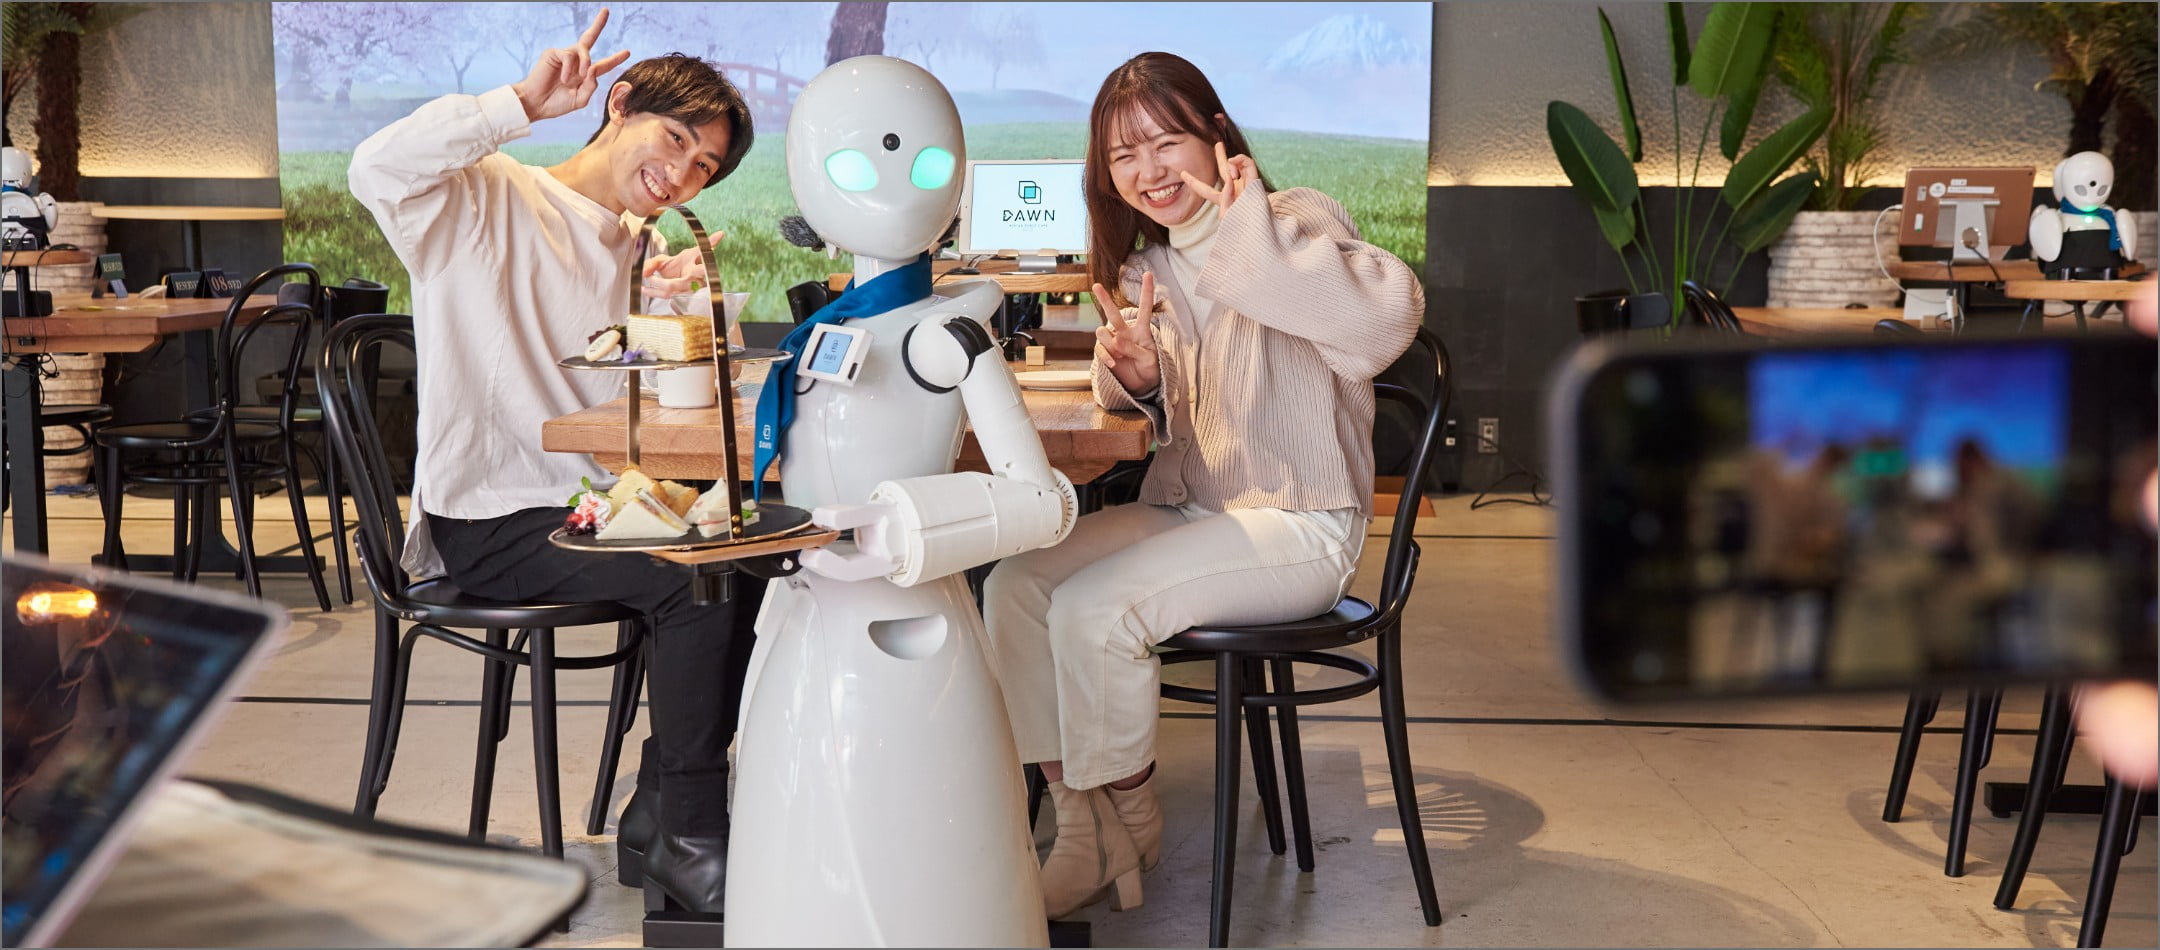 Avatar Robot Café